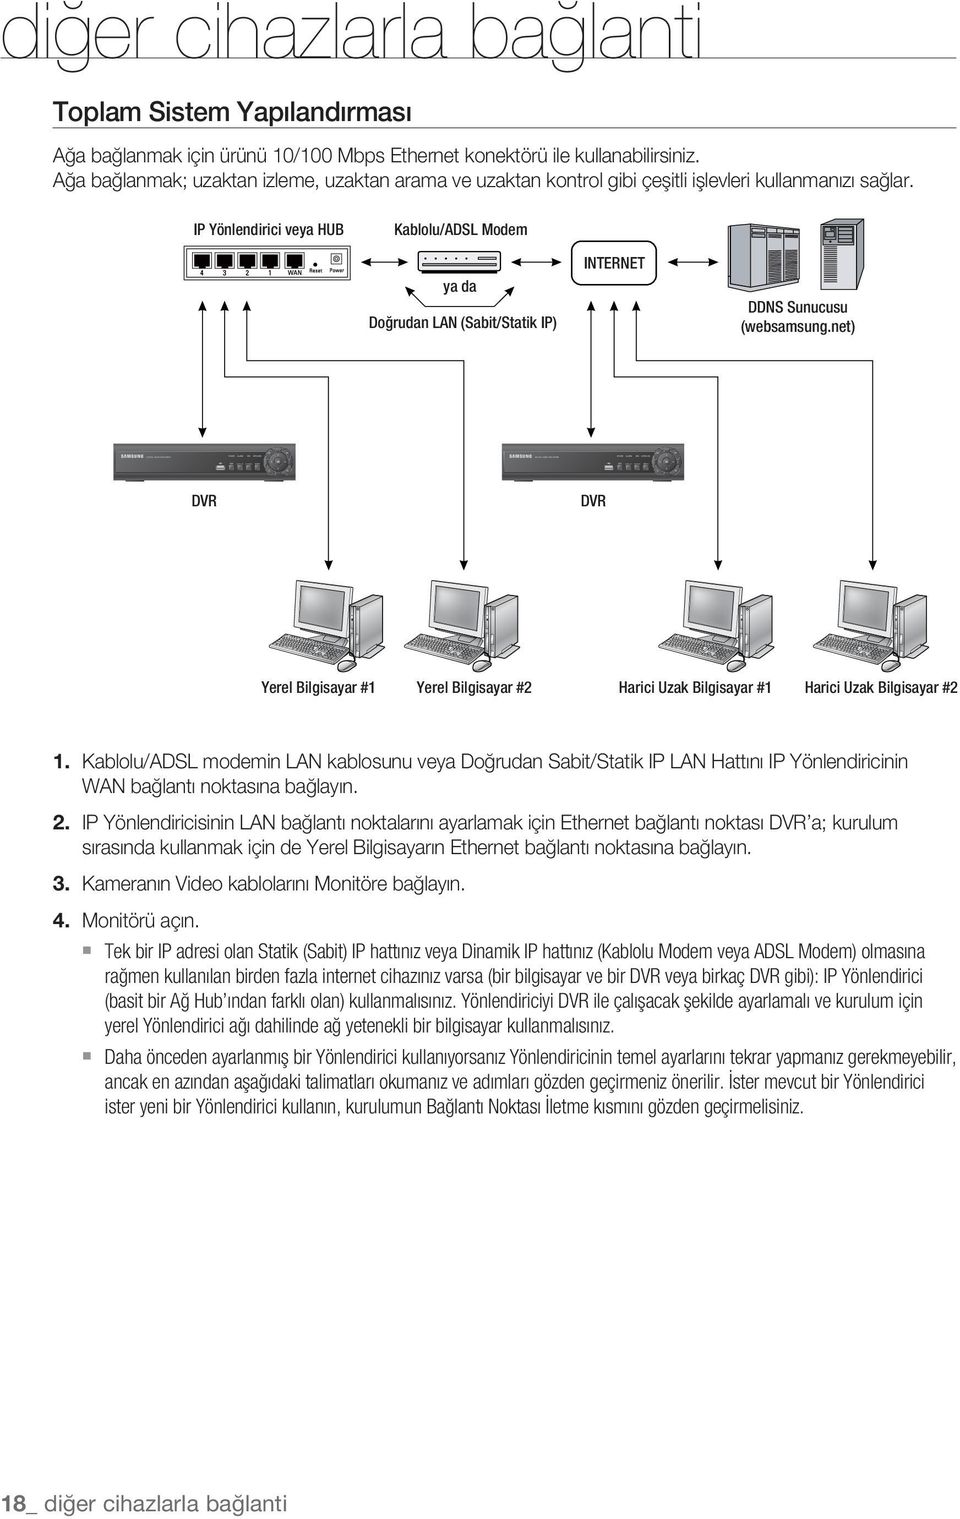 IP Yönlendirici veya HUB Kablolu/ADSL Modem ya da Doğrudan LAN (Sabit/Statik IP) INTERNET DDNS Sunucusu (websamsung.